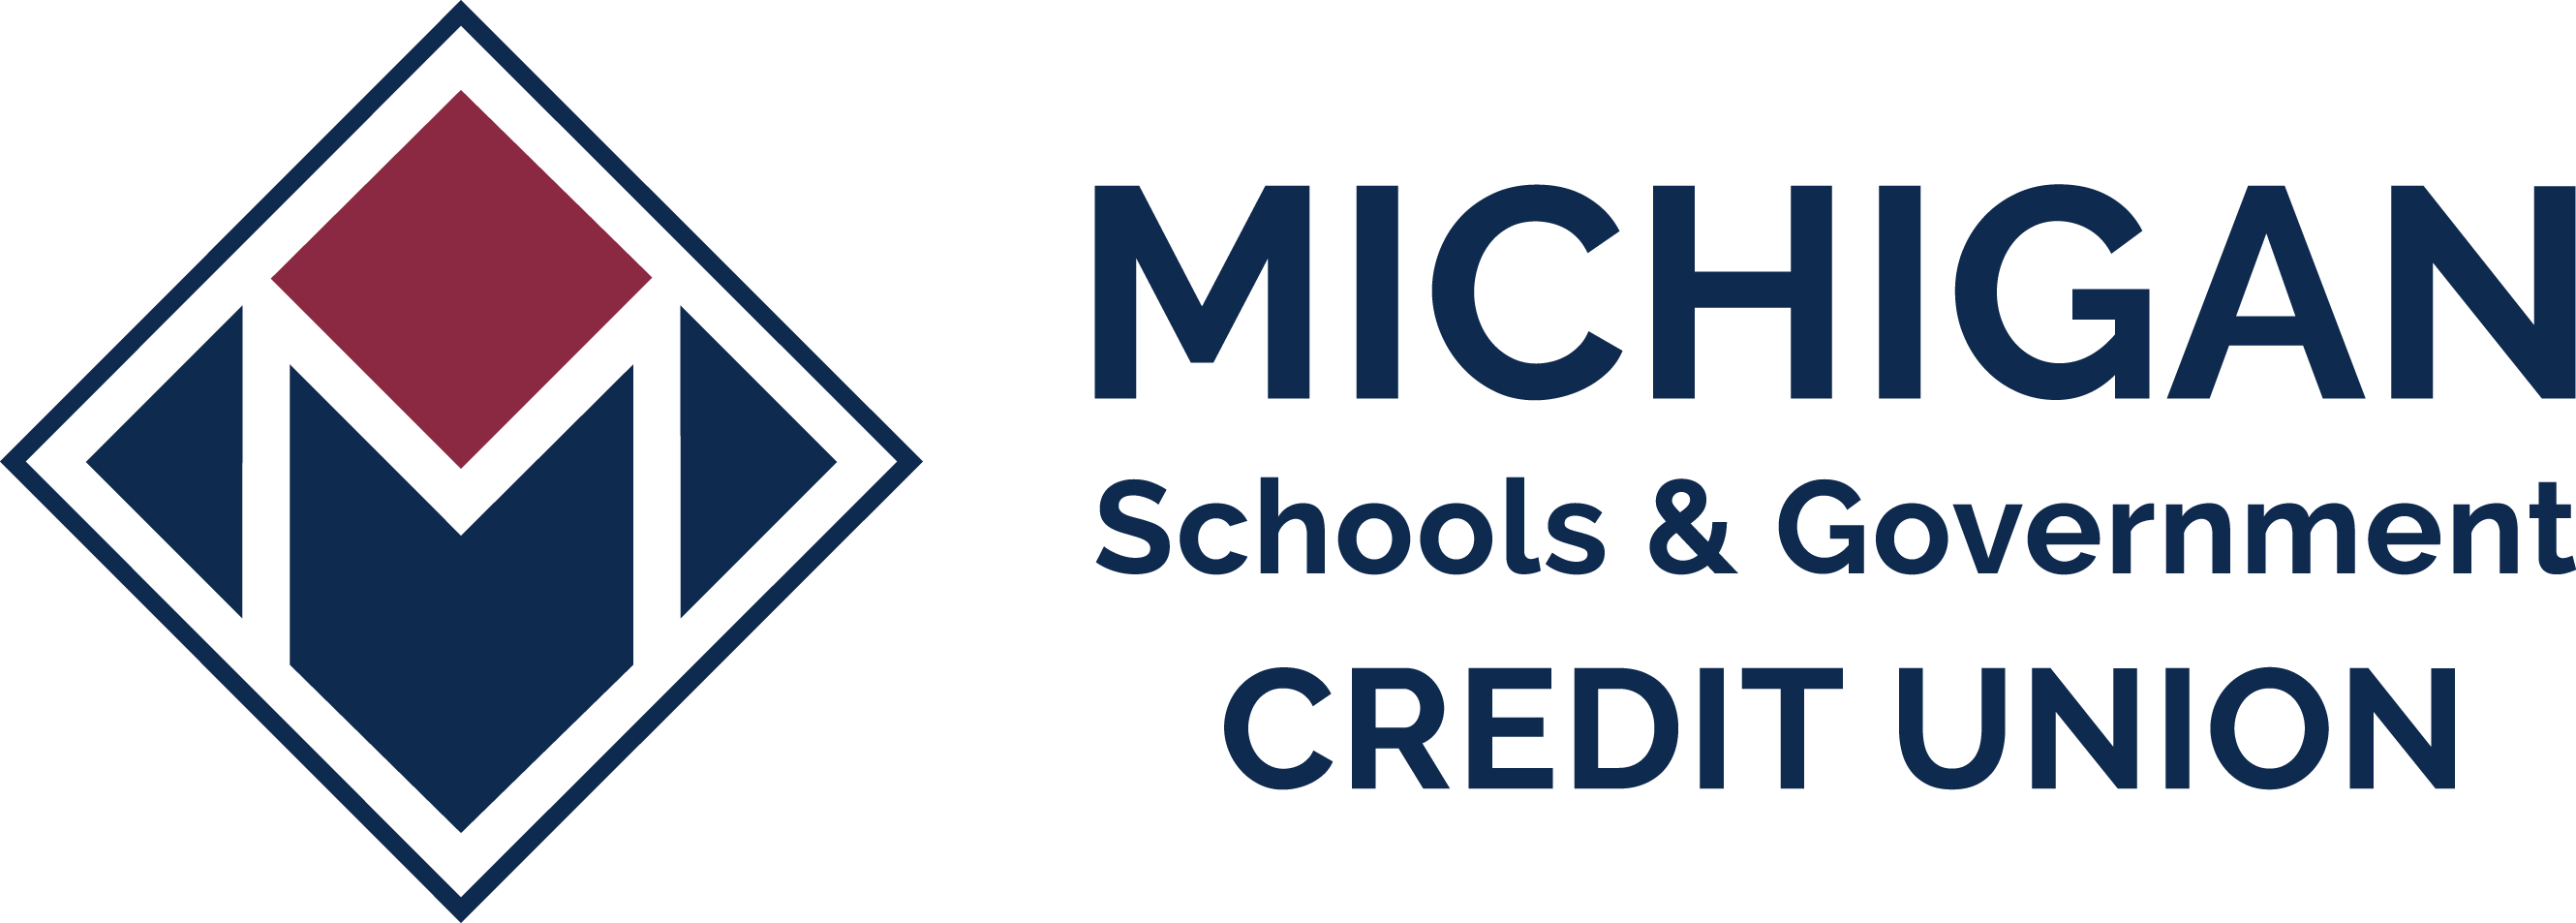 Michigan Schools & Government Credit Union